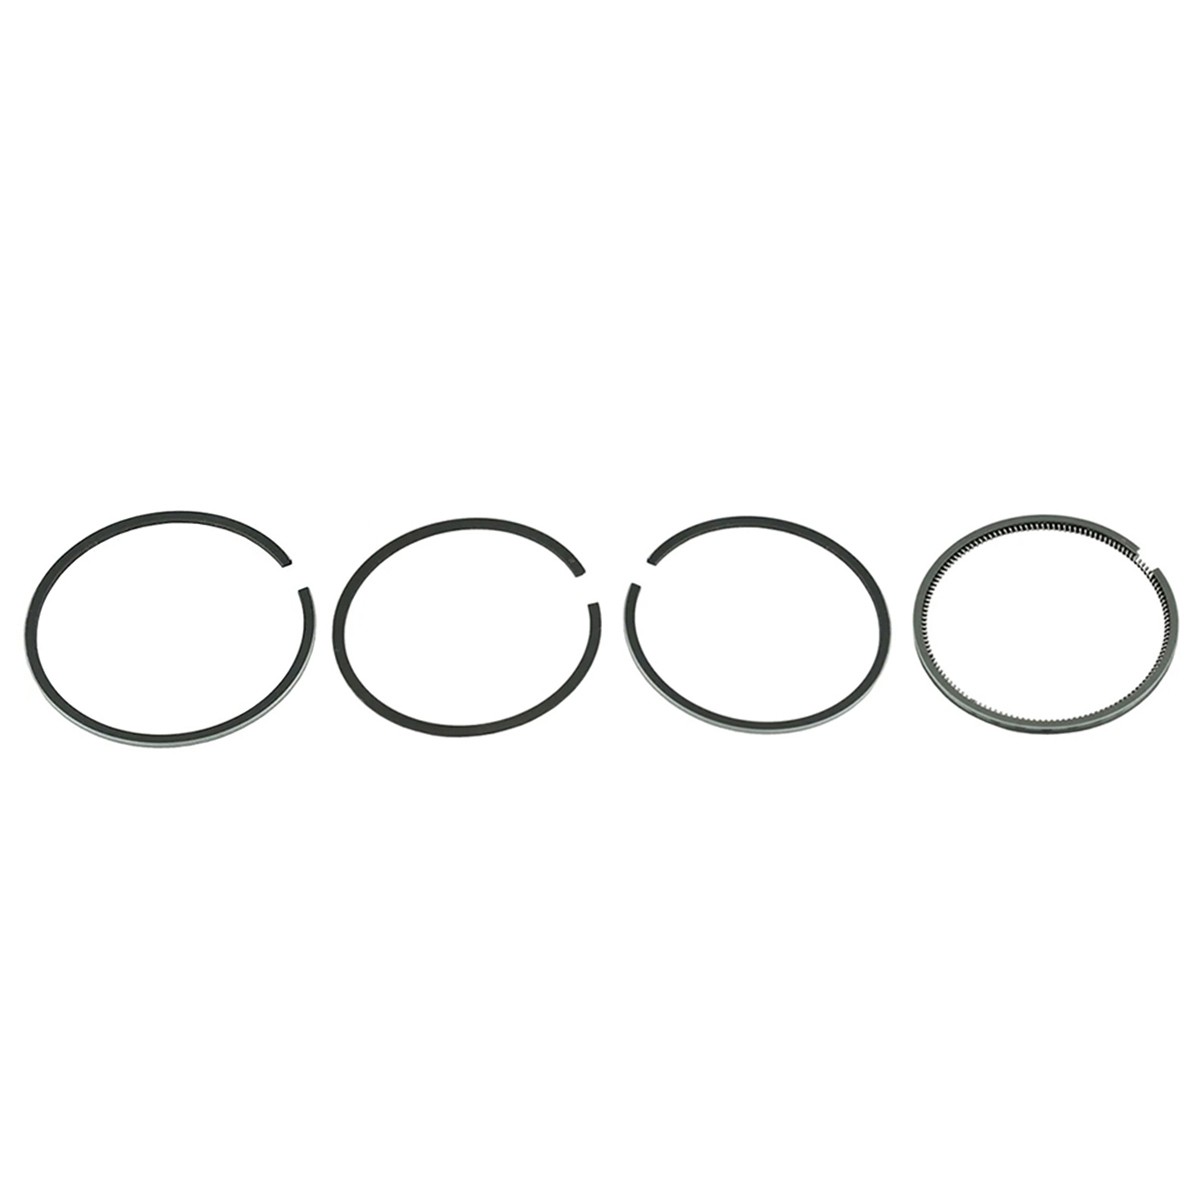 Piston rings / Ø 95 mm / 2.50 x 2.00 x 2.00 x 4.50 mm / Toyosha S135 / Hinomoto E25/E250 / 2701-3110-000 / 7-26-100-05